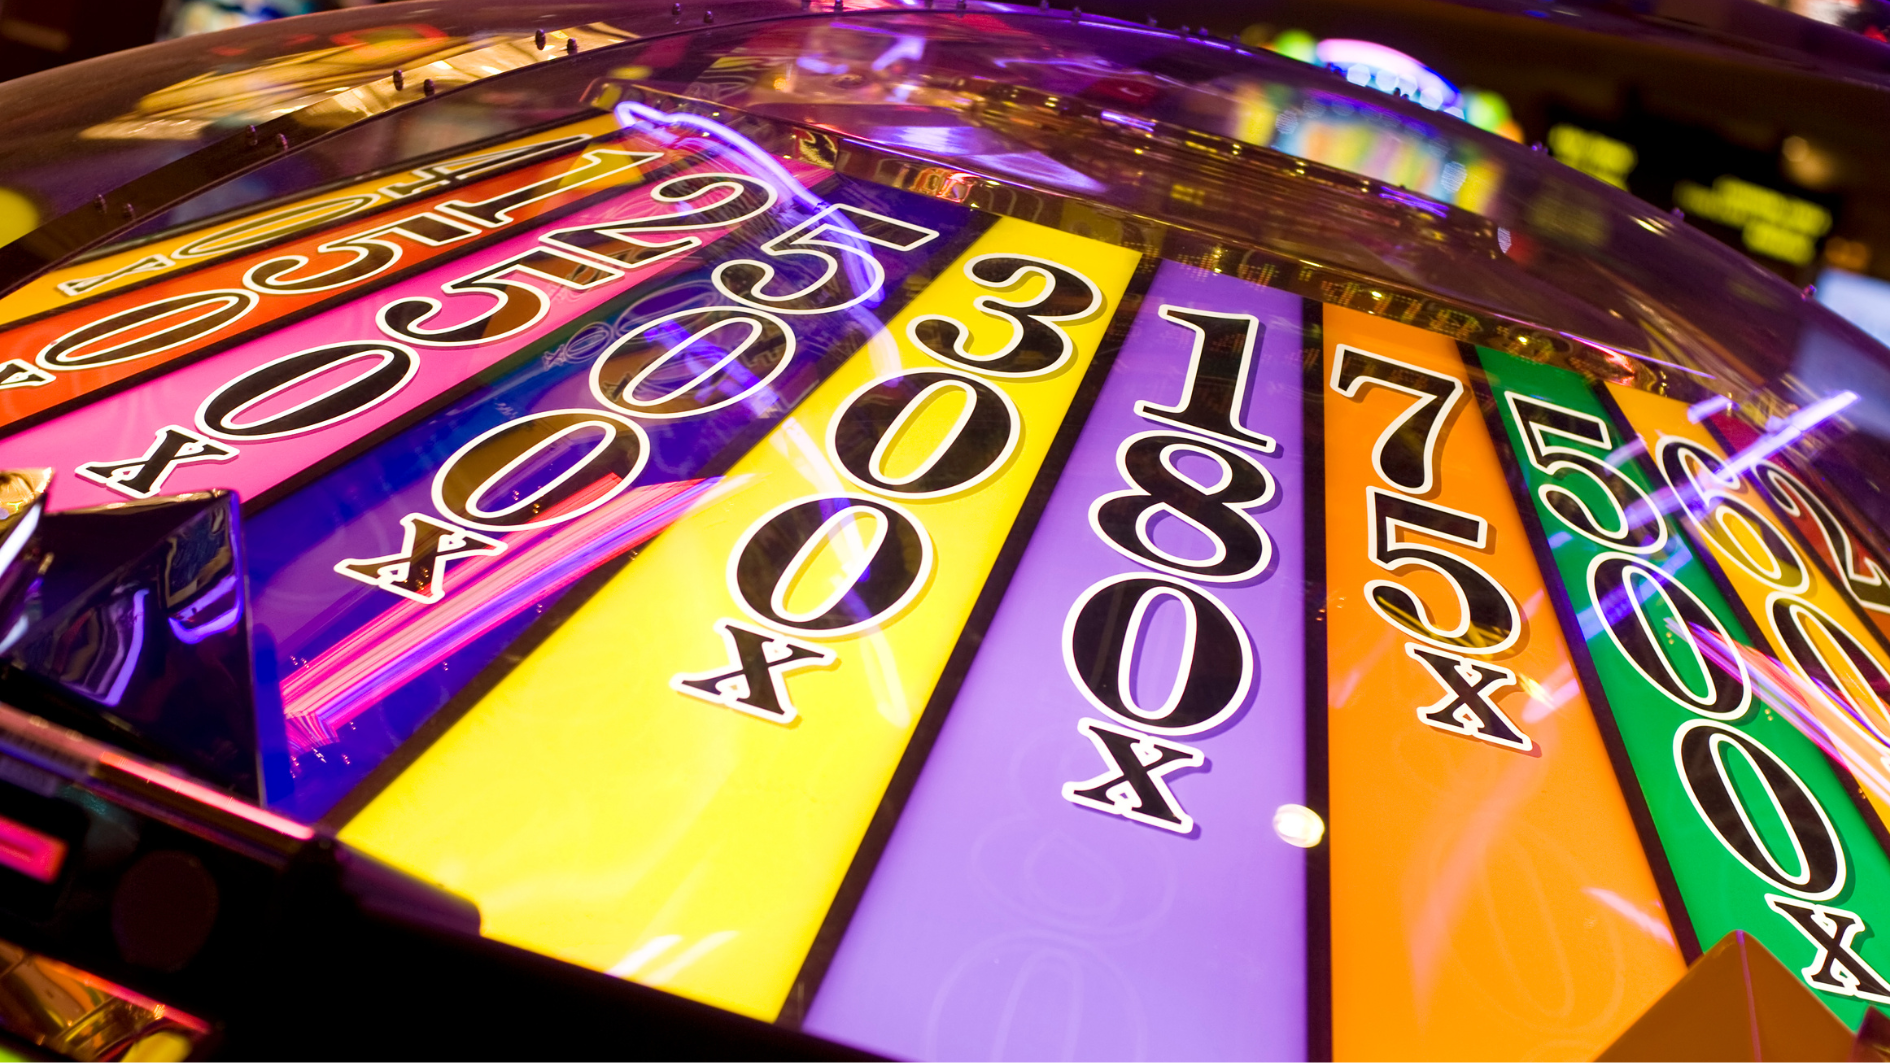 Someone wins $1.3M jackpot at Las Vegas airport slot machine